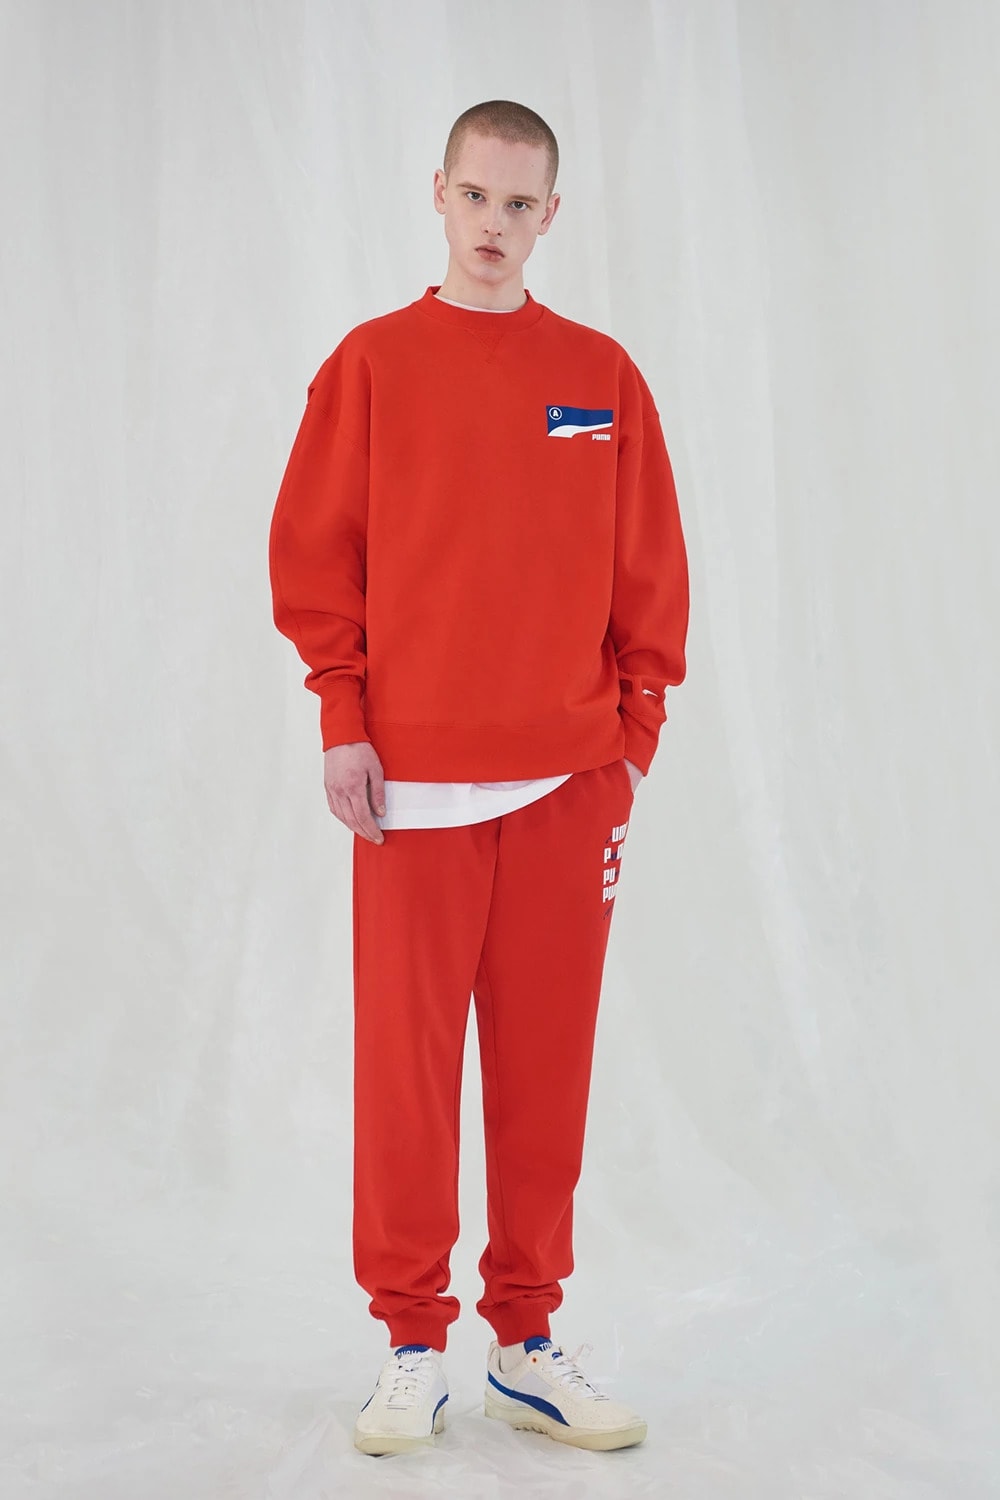 Ader Error x PUMA Spring Summer 2019 Lookbook Sweatshirt Pants Red